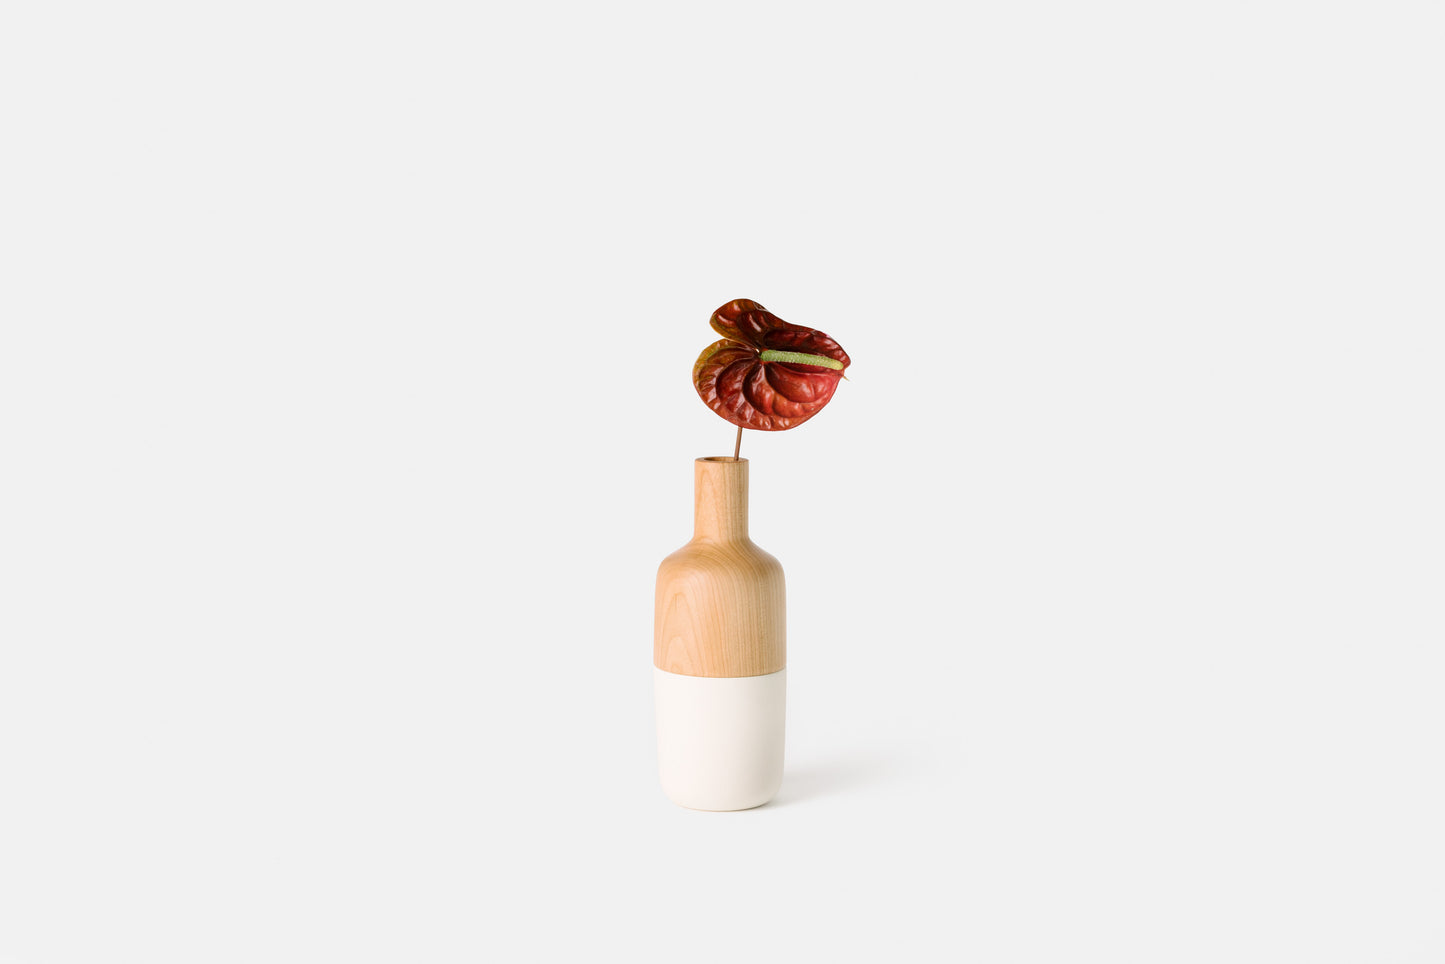 Cherry and white ceramic marais vase by Melanie Abrantes Designs.